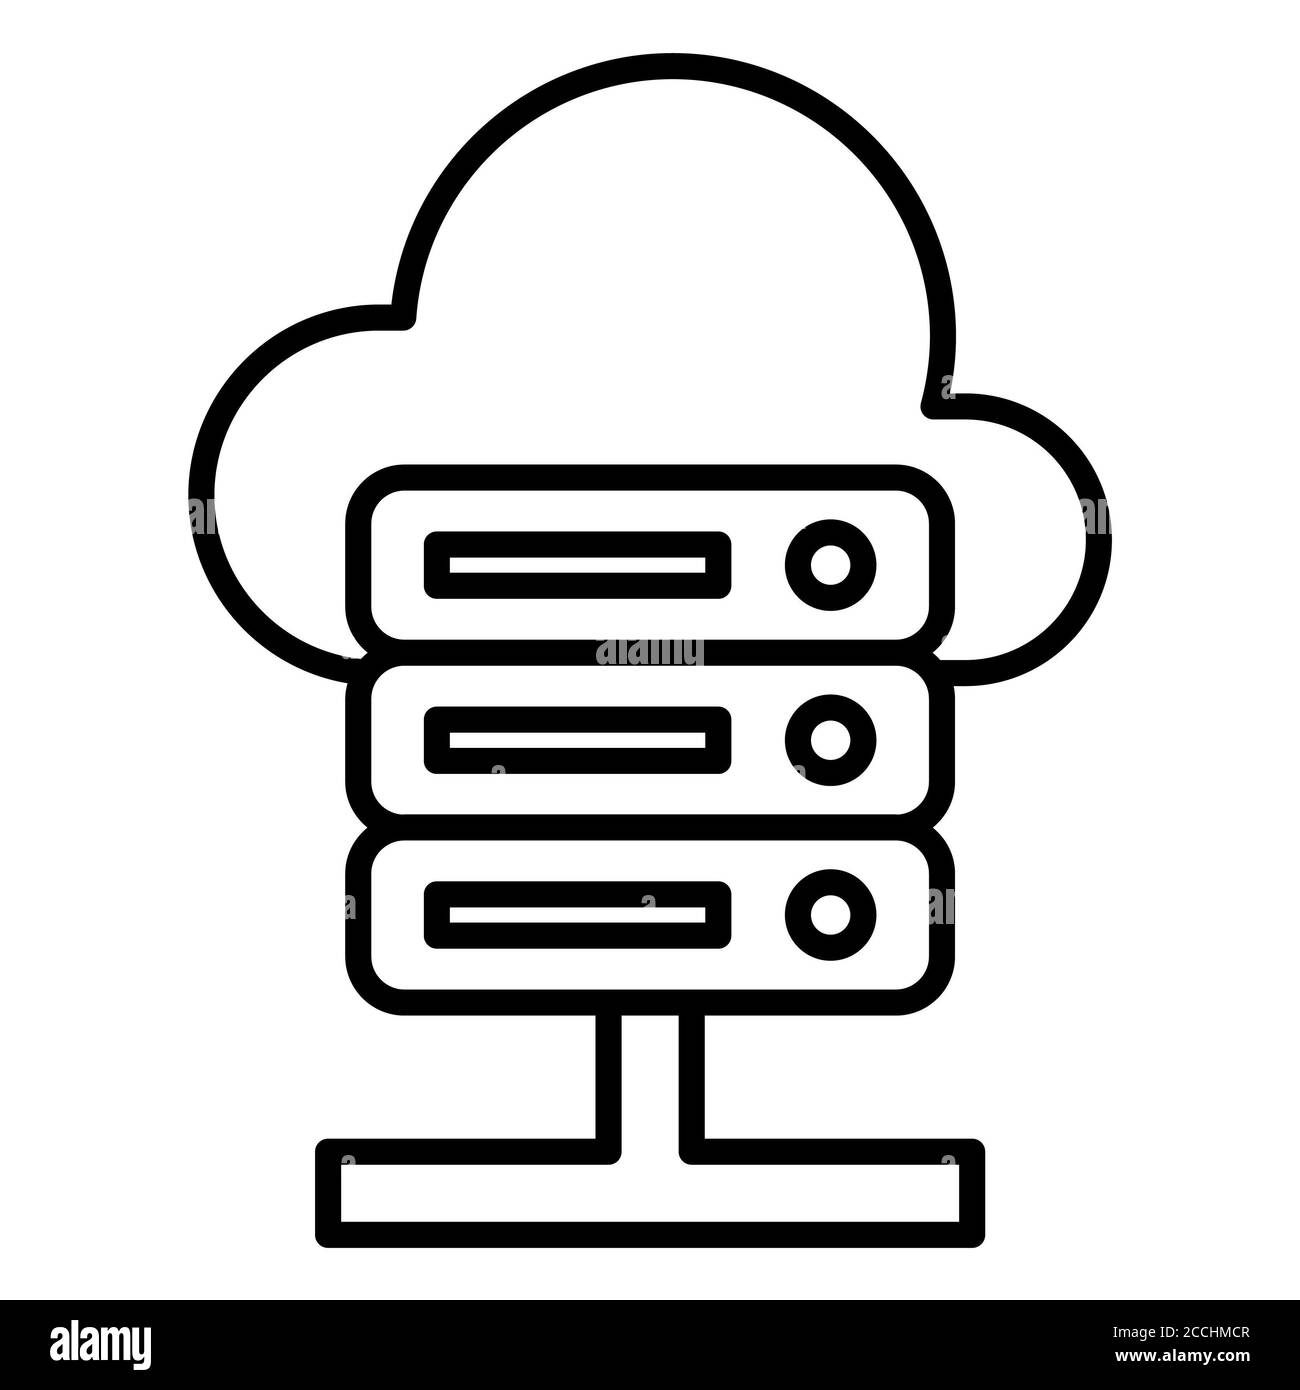 Cloud Server Line Icon Stock Photo